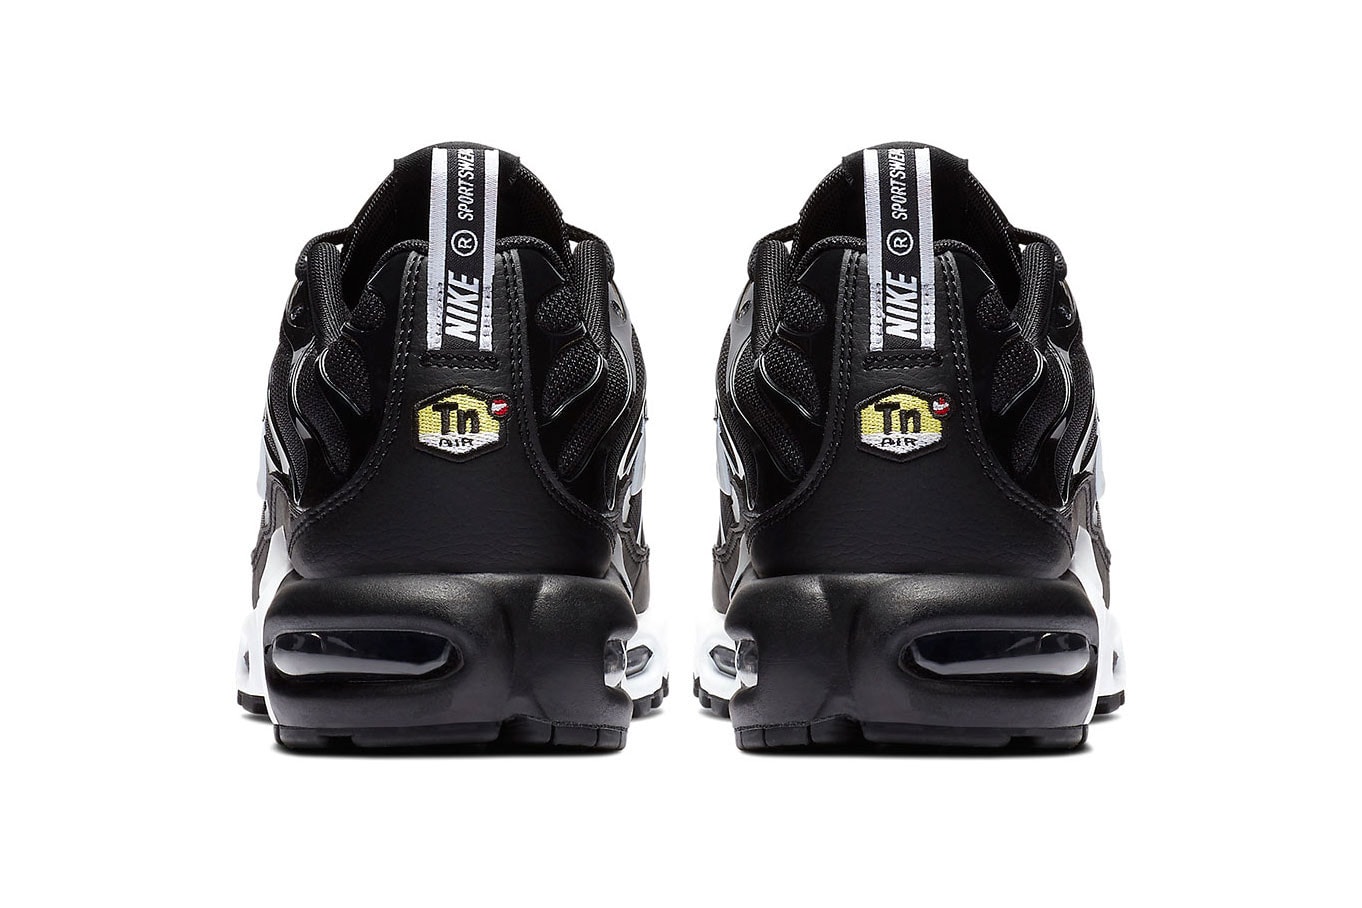 Nike Air Max Plus “Overbranding” Series Double Swoosh Black White Sneaker Shoe 